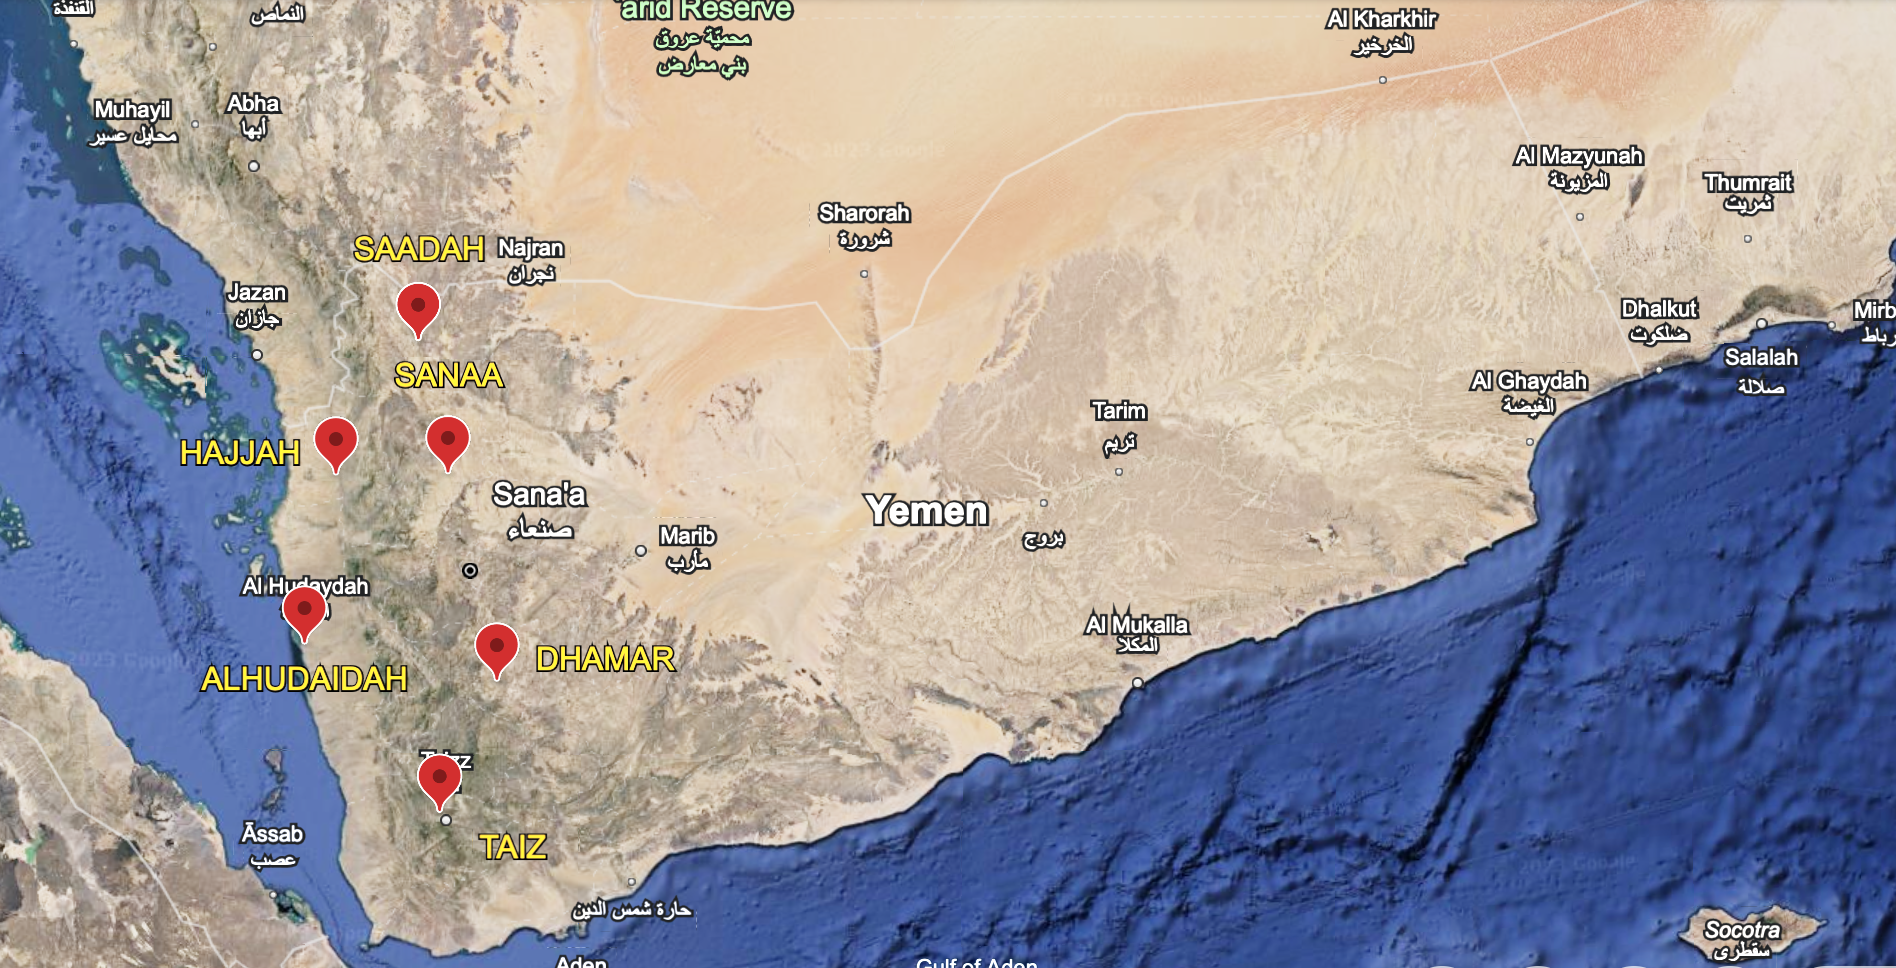 U.S. and U.K. Strike Six-Houthi-Controlled Provinces in Yemen